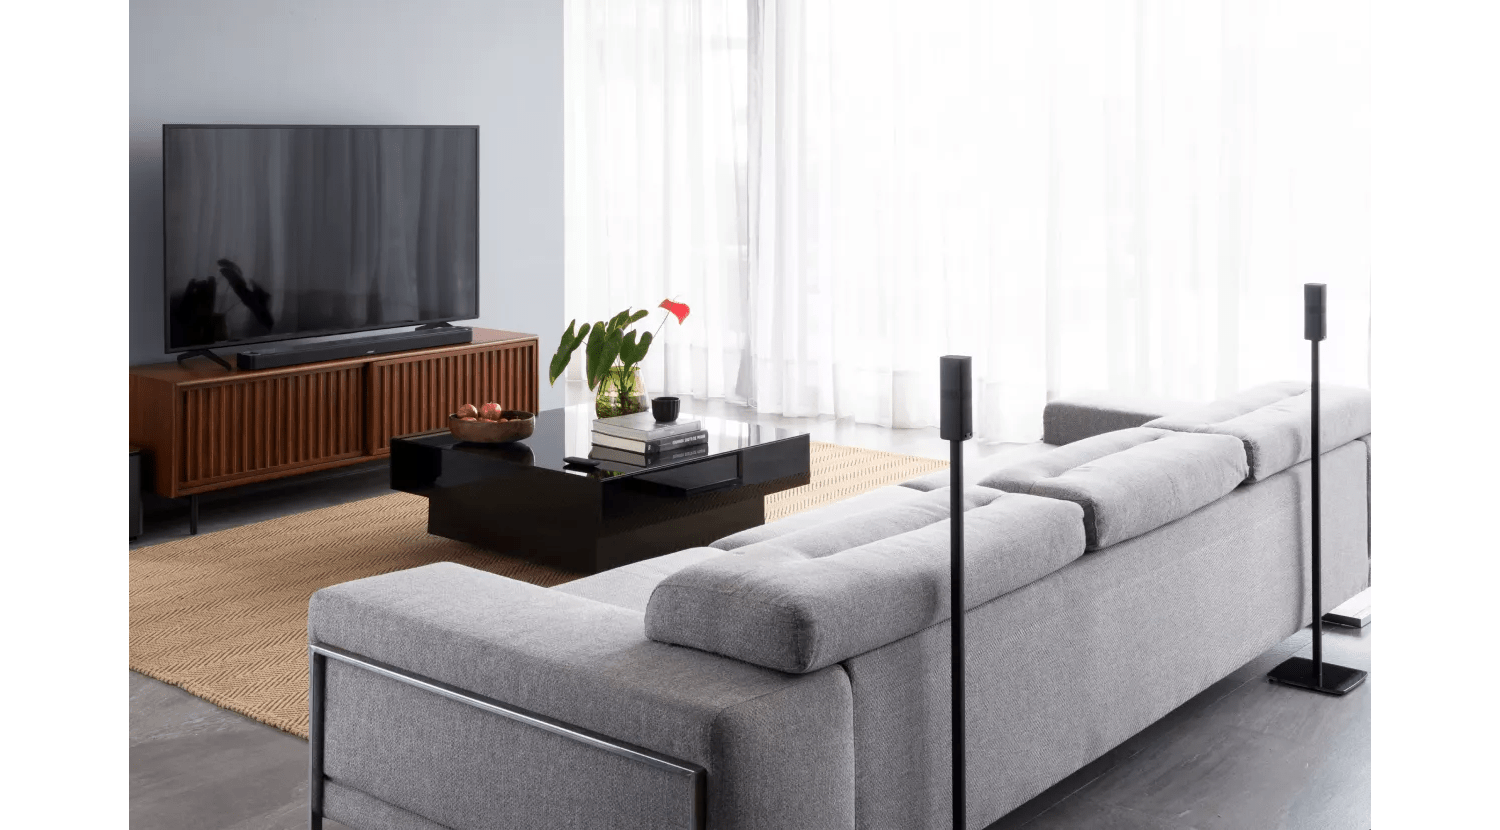 Bose Surround Speakers 700 in a living room on floor speaker stands